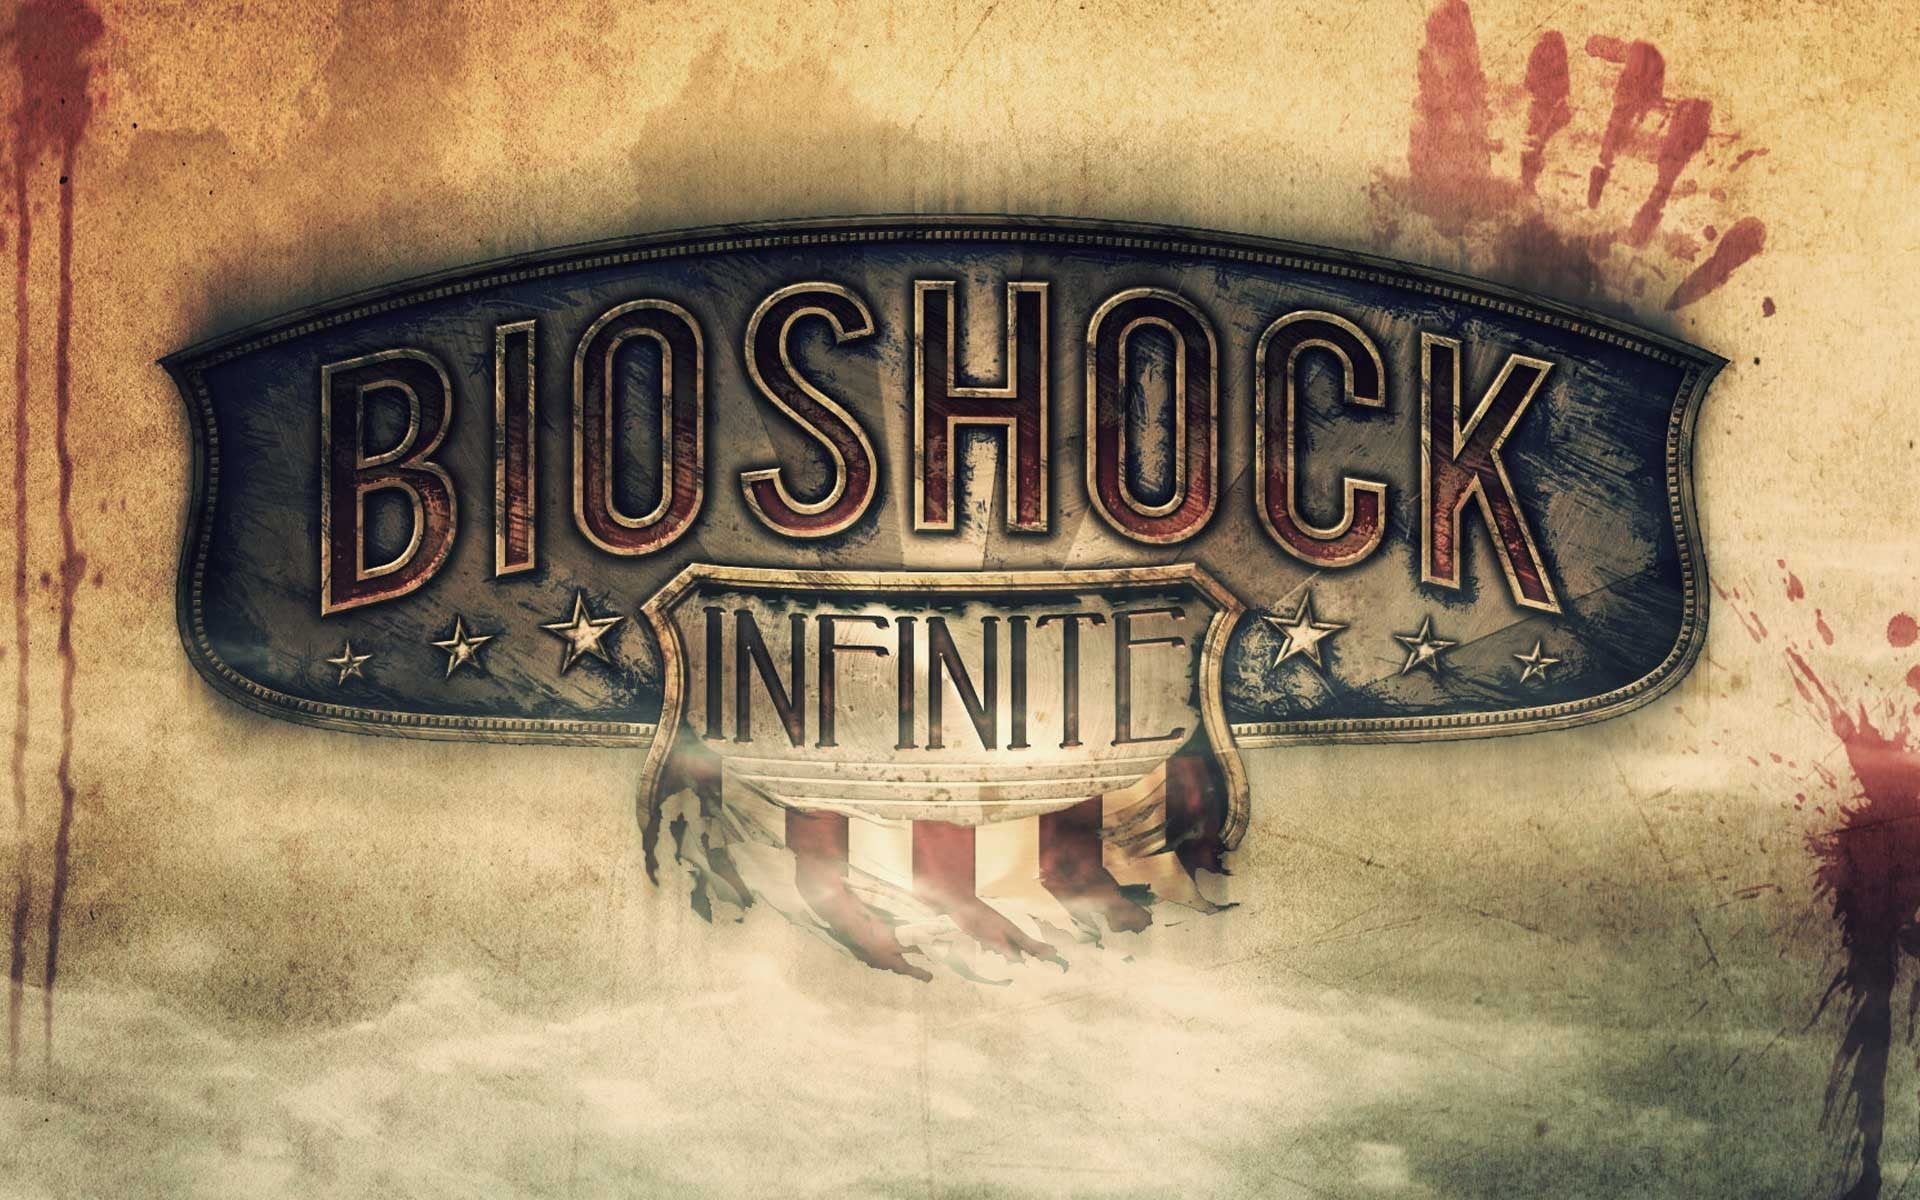 Bioshock infinite poloster